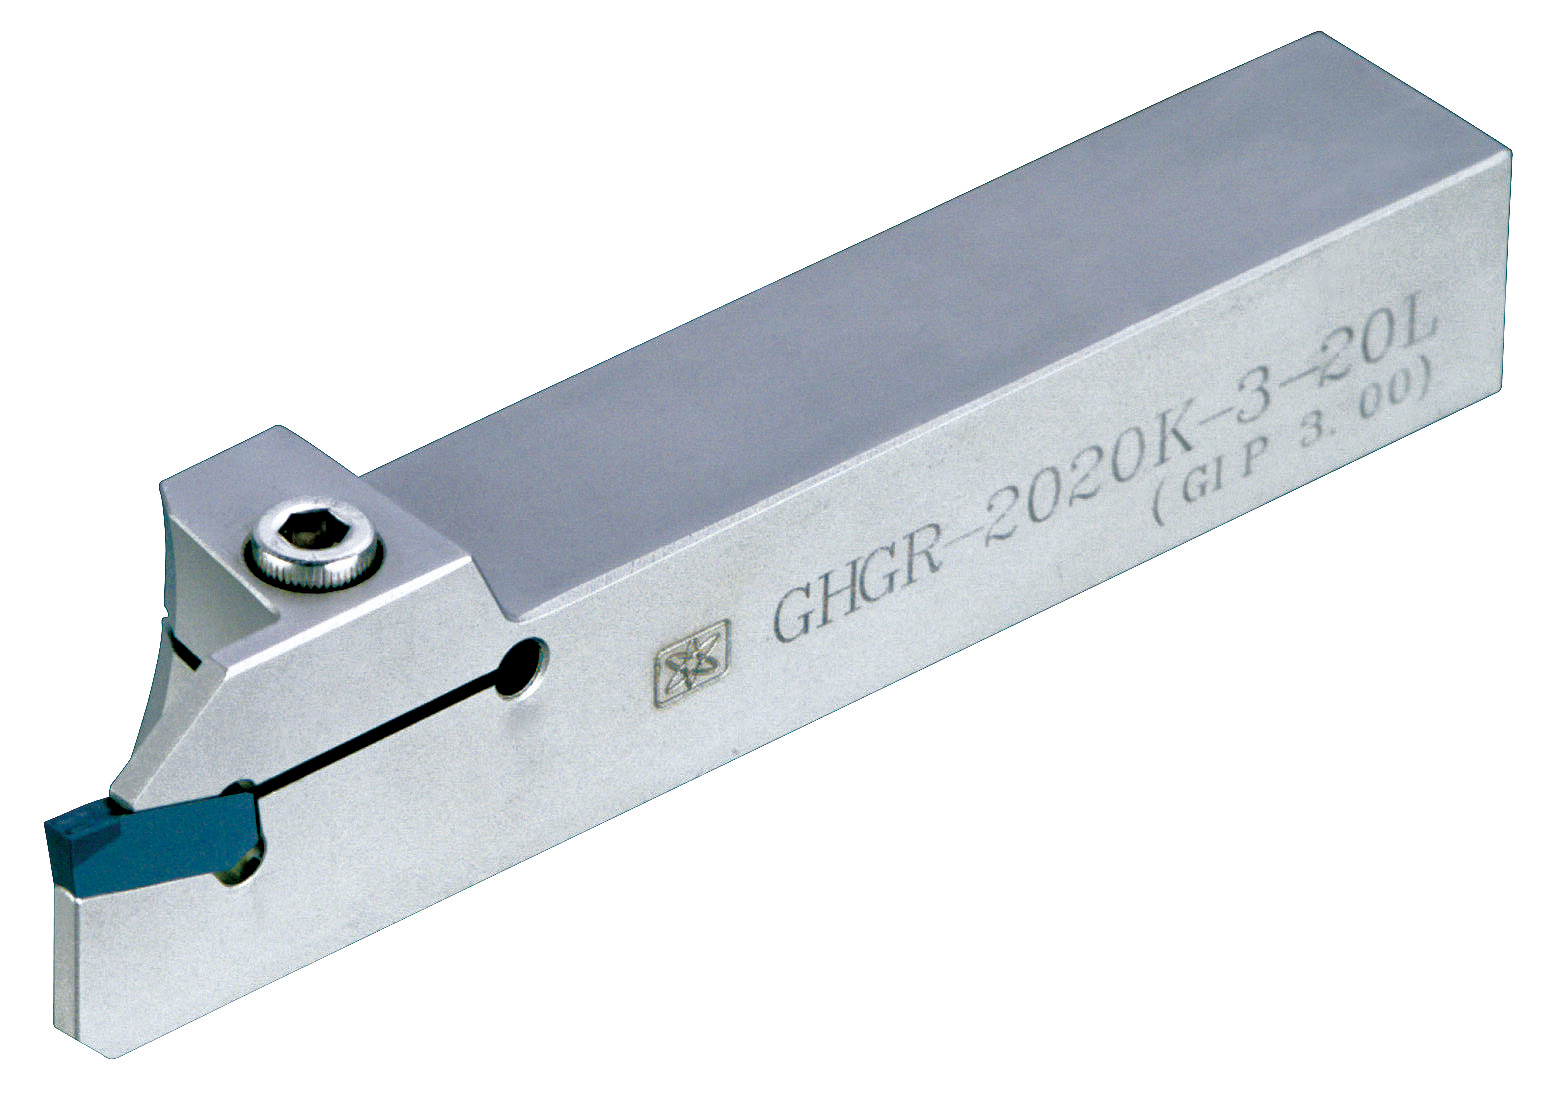 Catalog|GHGR (GIP / GIF / GIMF / GIMY) External Turning Tool Holders